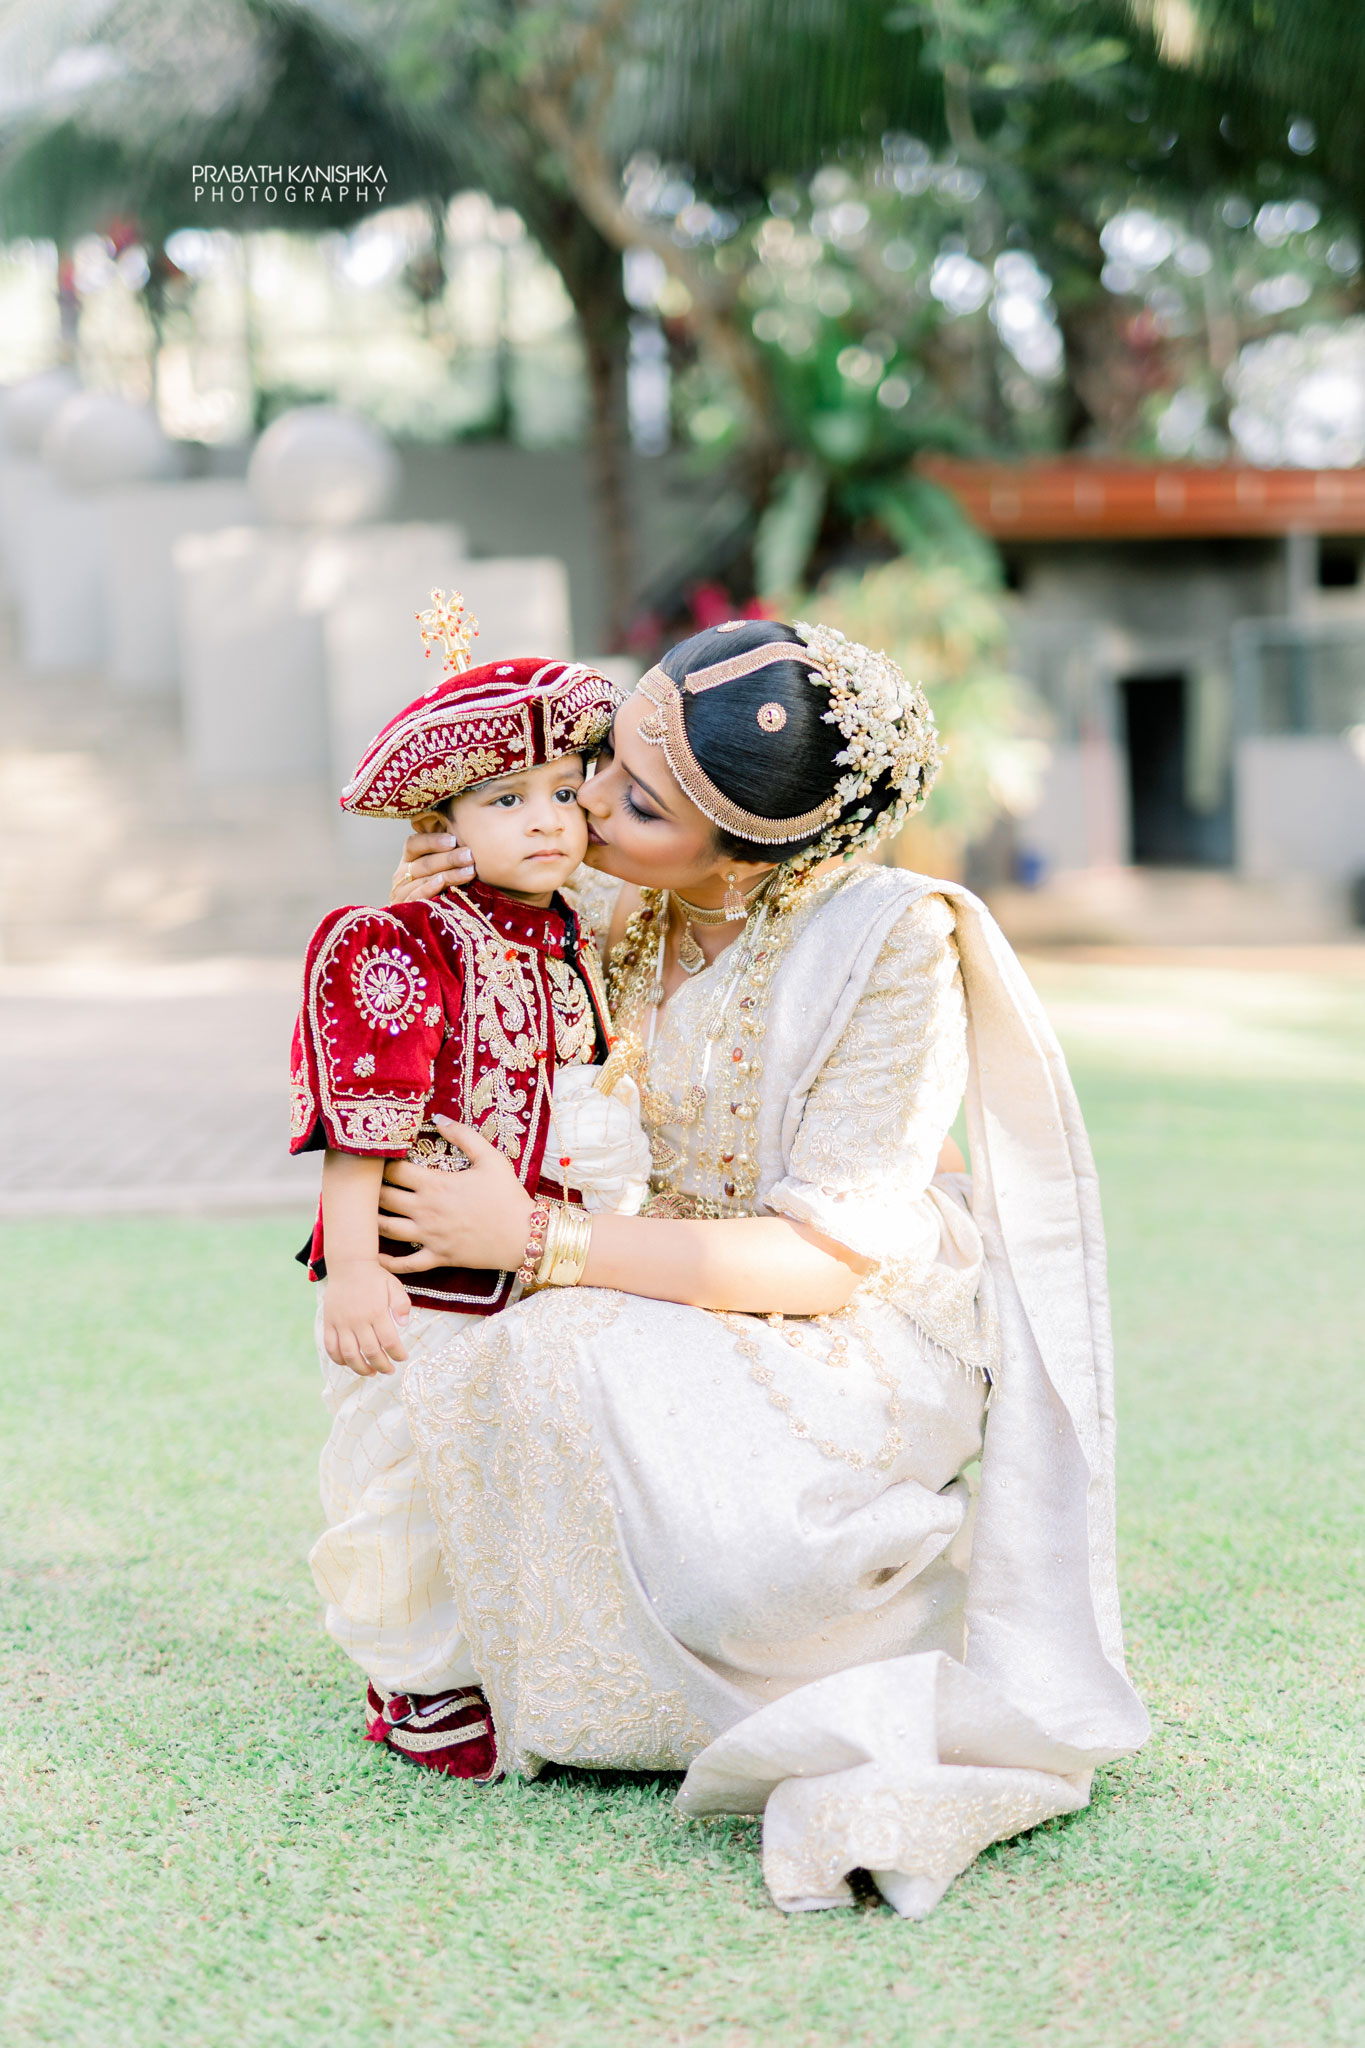 Sandali & Lahiru - Prabath Kanishka Wedding Photography